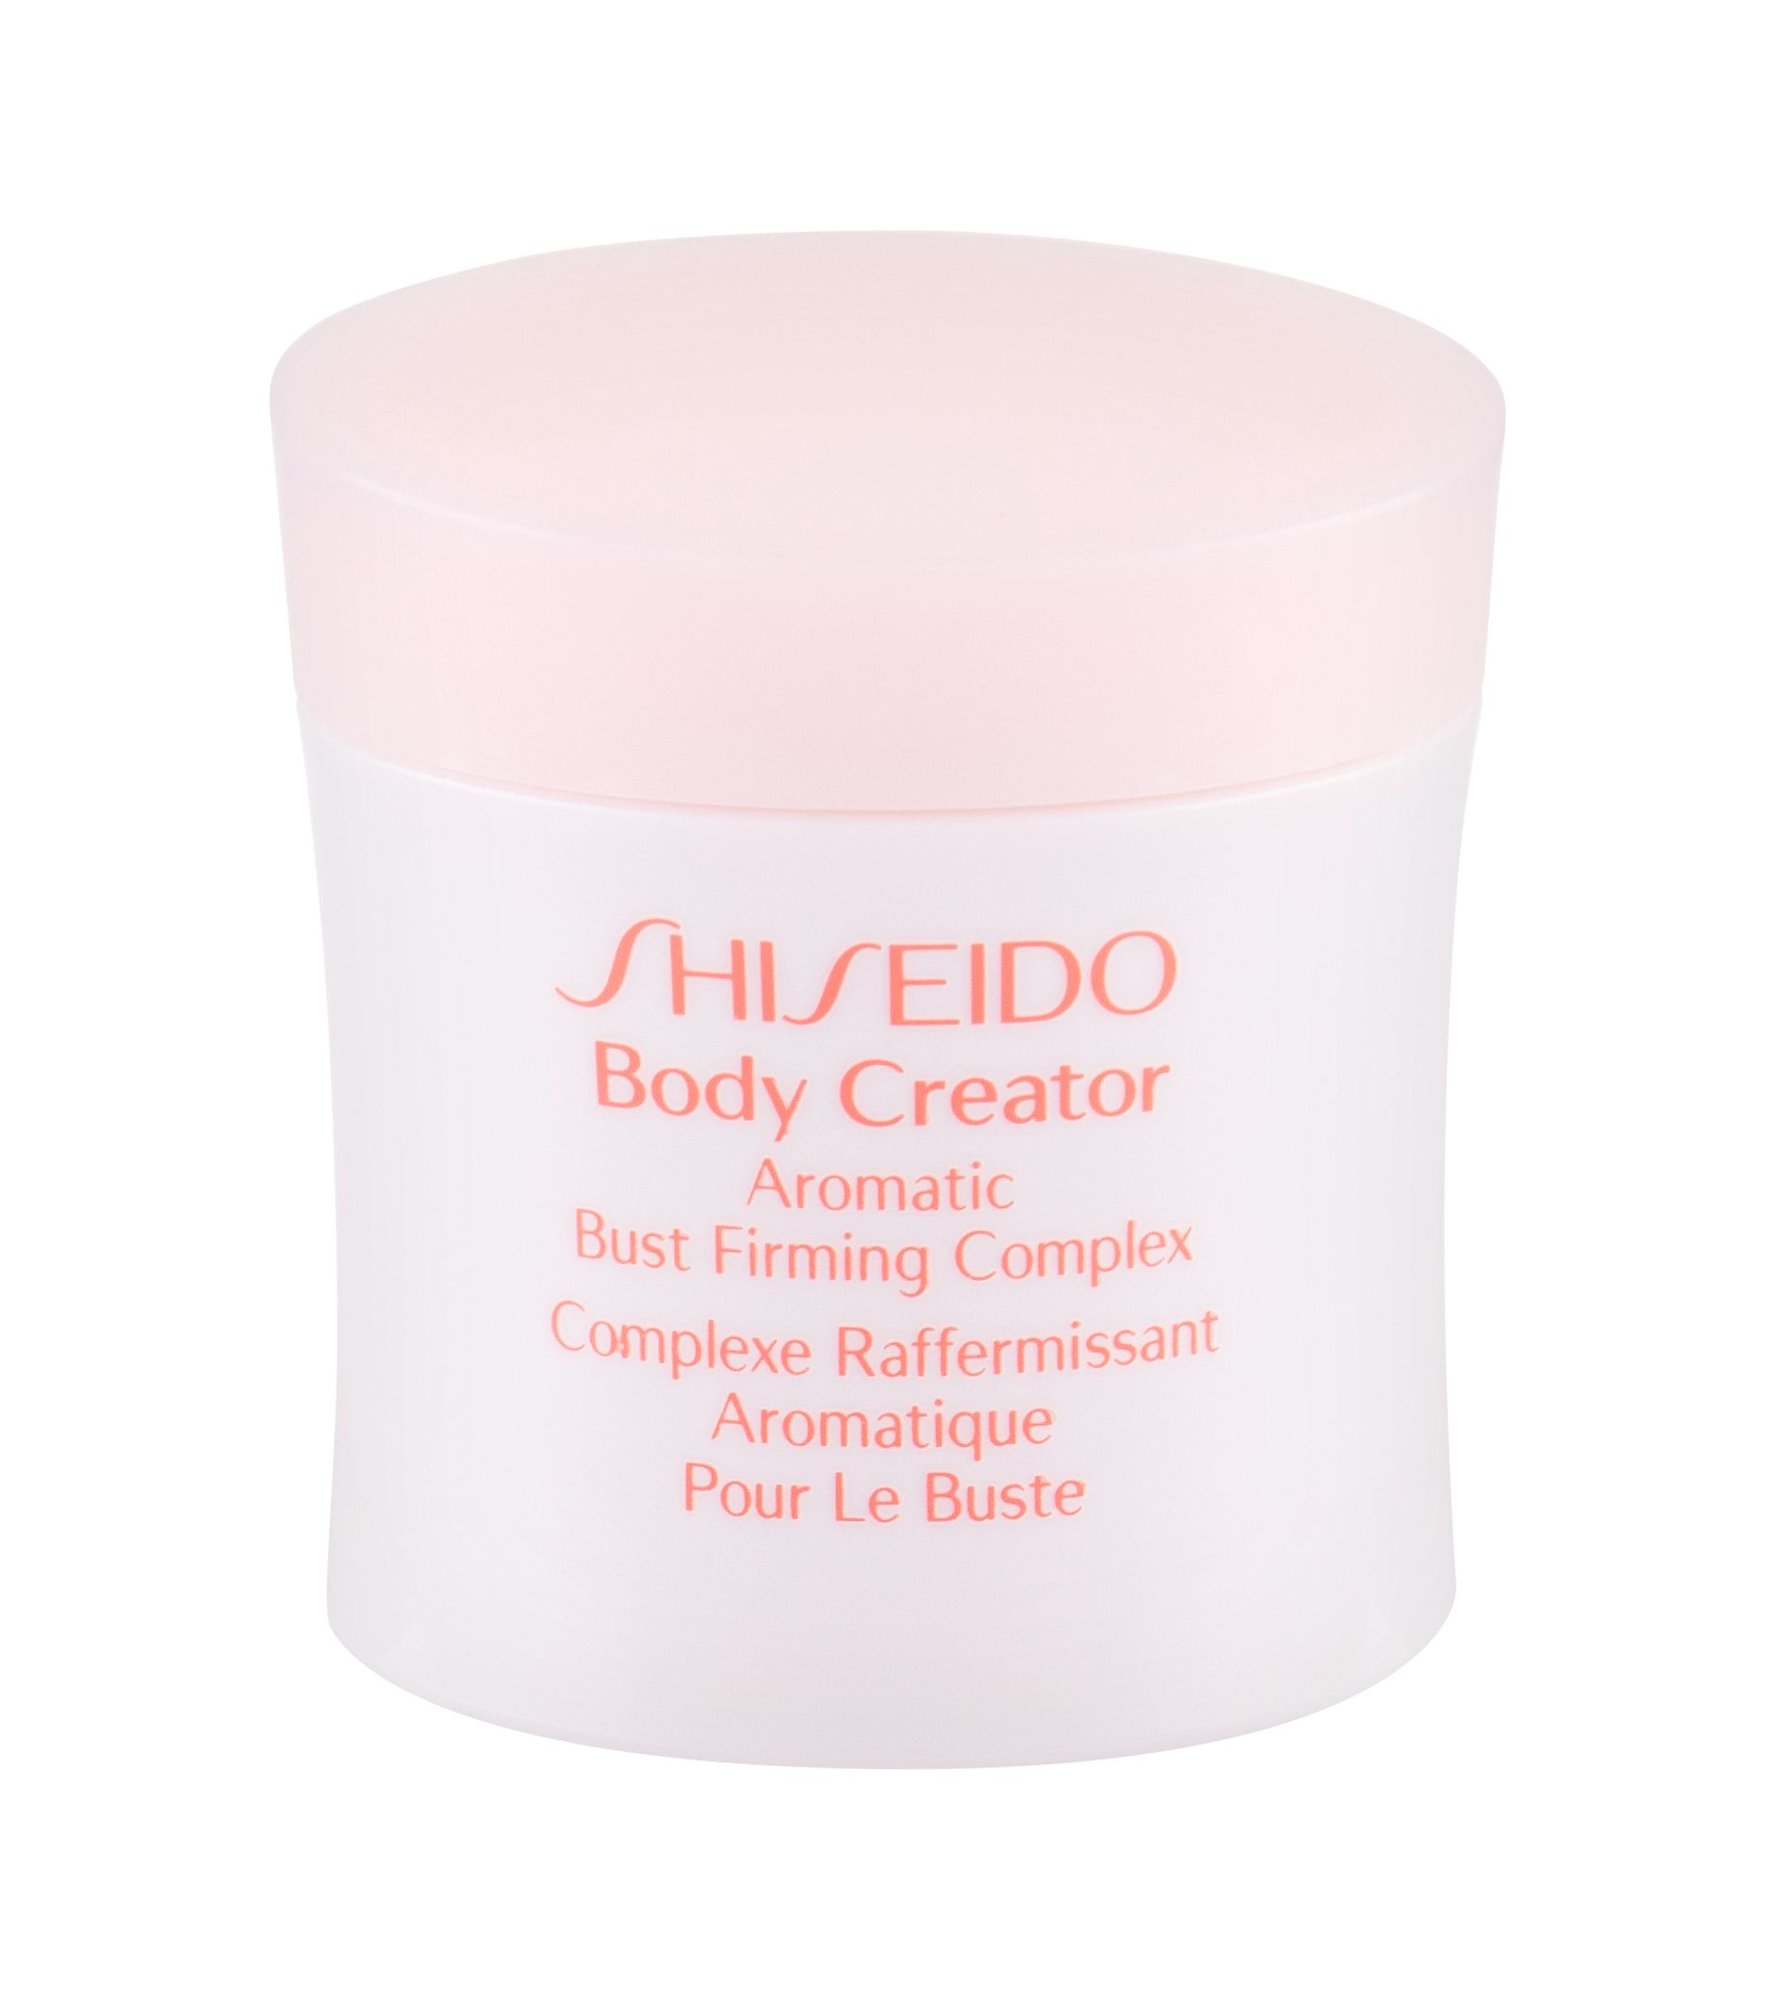 Shiseido BODY CREATOR Aromatic Bust Firming Complex